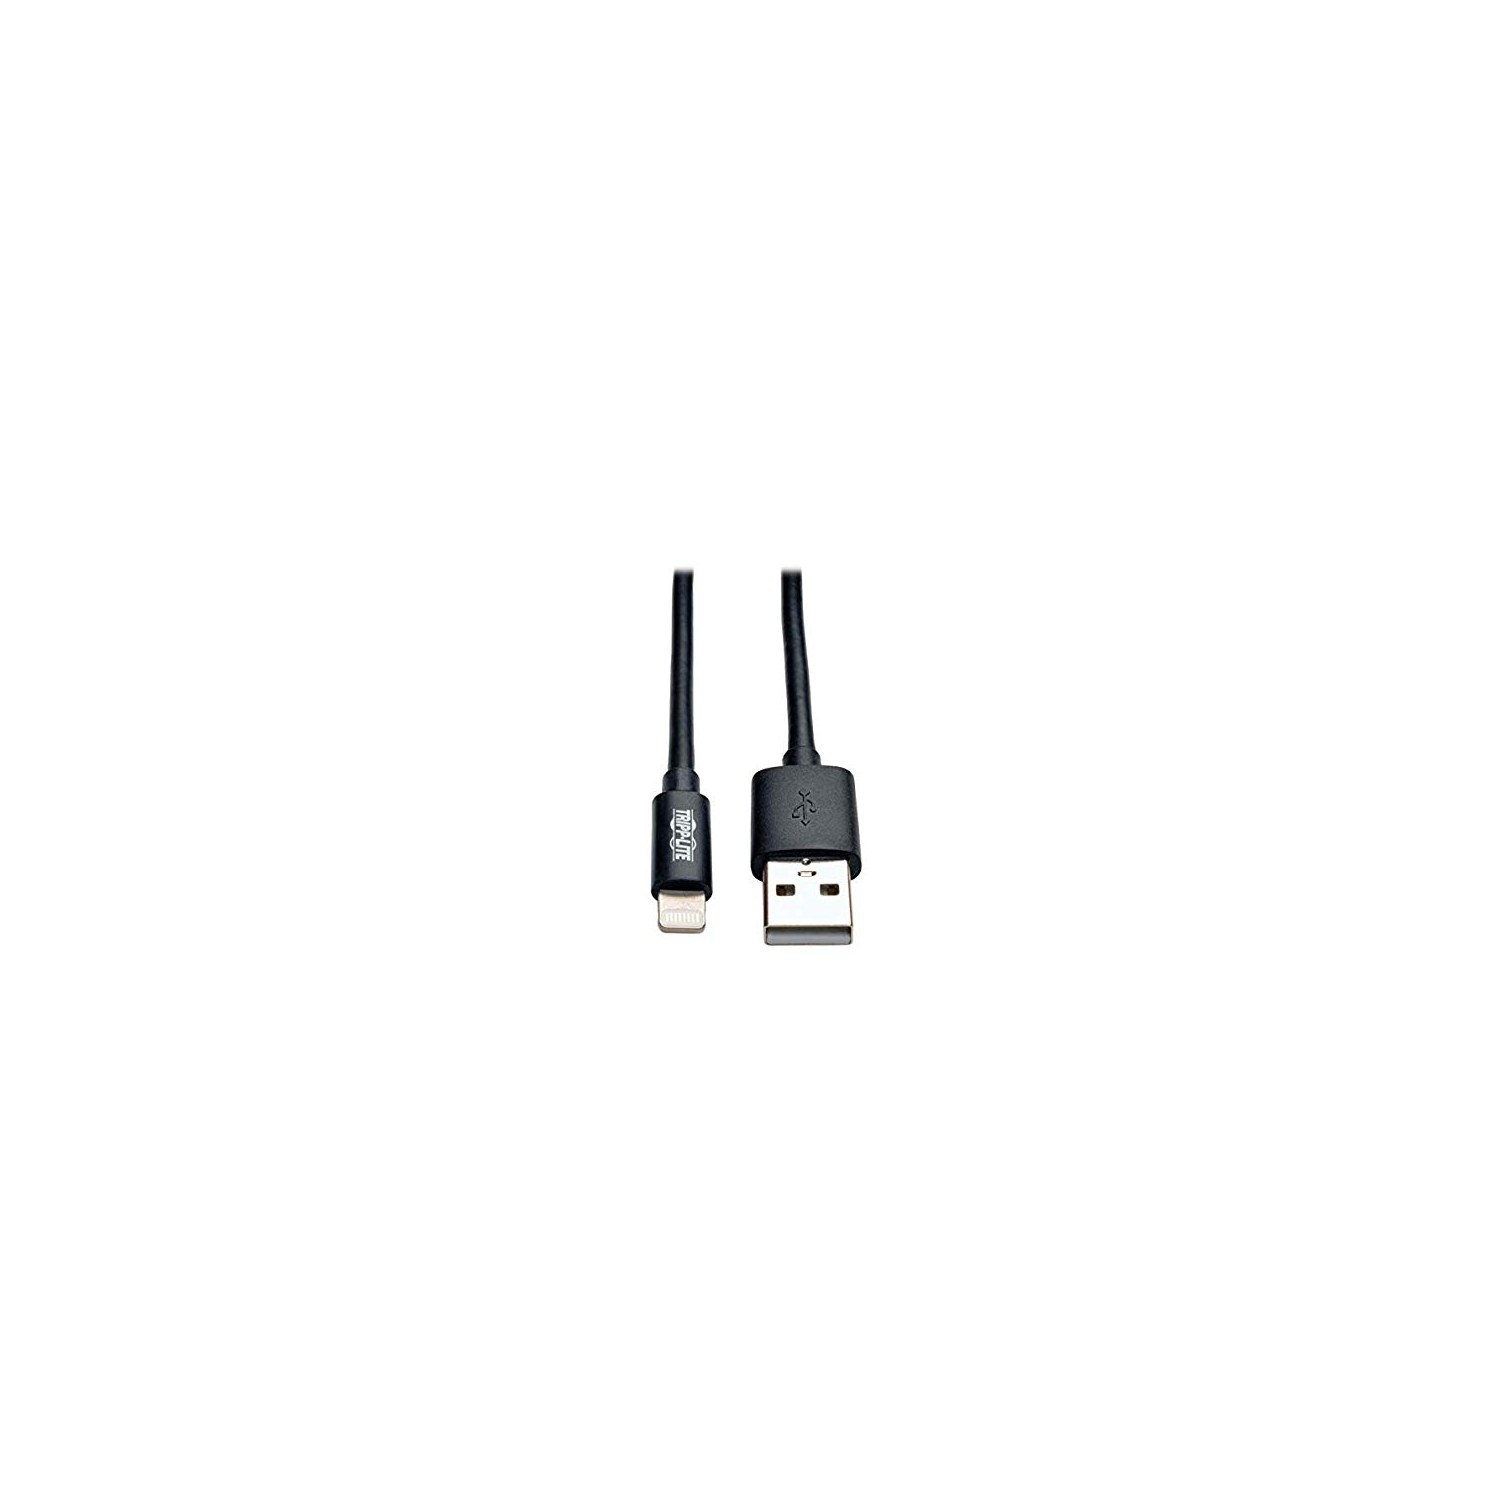 Tripp Lite Apple MFI Certified 6-Feet 2M Lightning to USB Cable Sync Charge iPhone iPod iPad-Black (M100-006-BK)